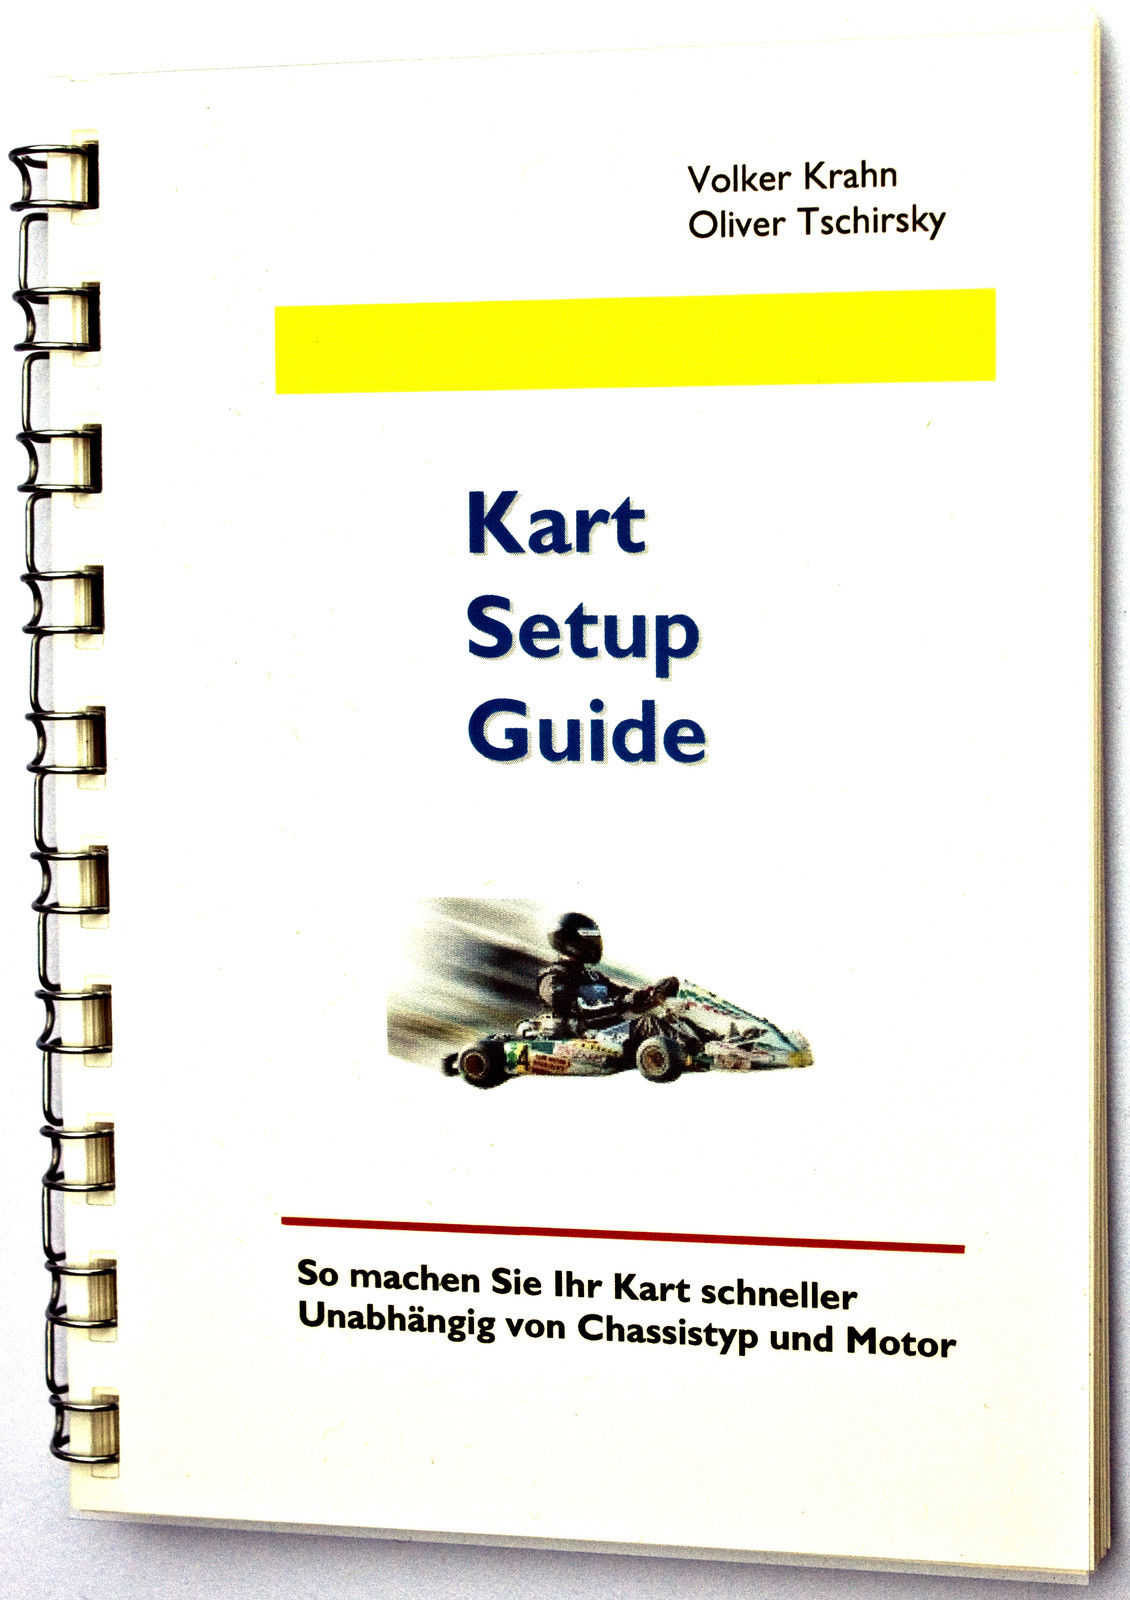 Kart Setup Guide